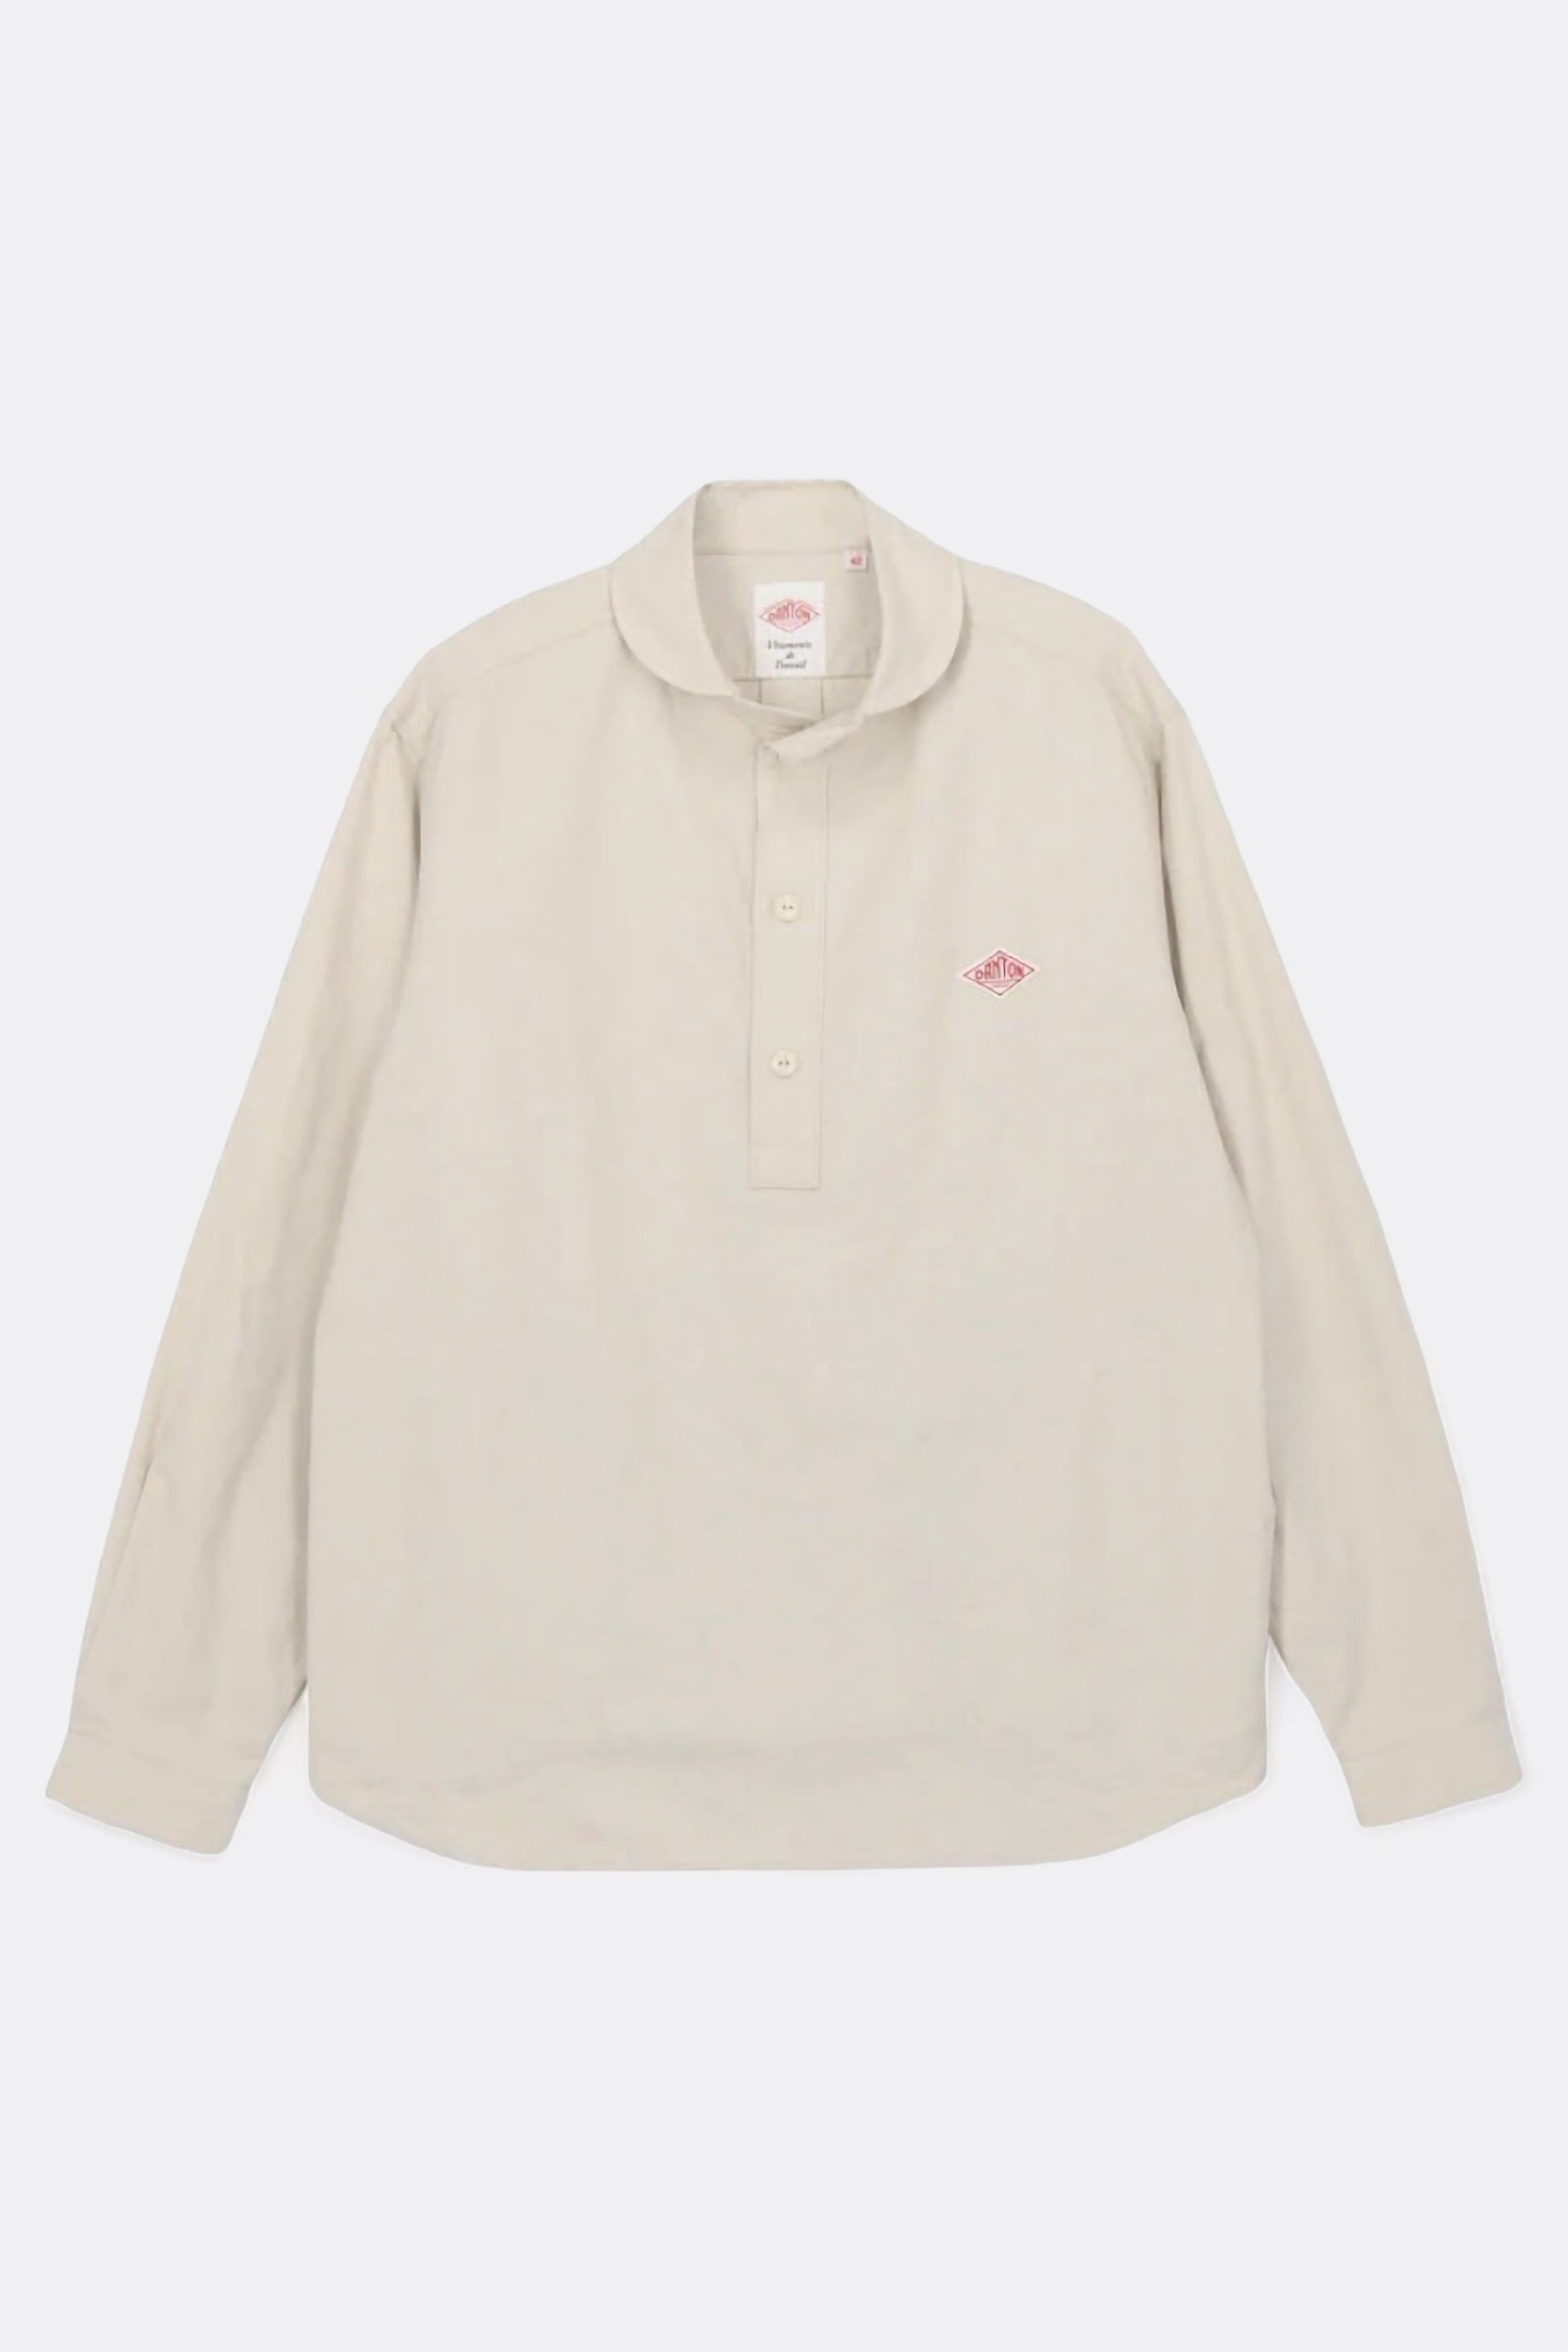 Danton - Plain Oxford Round Collar Pullover Shirt (Oyster)